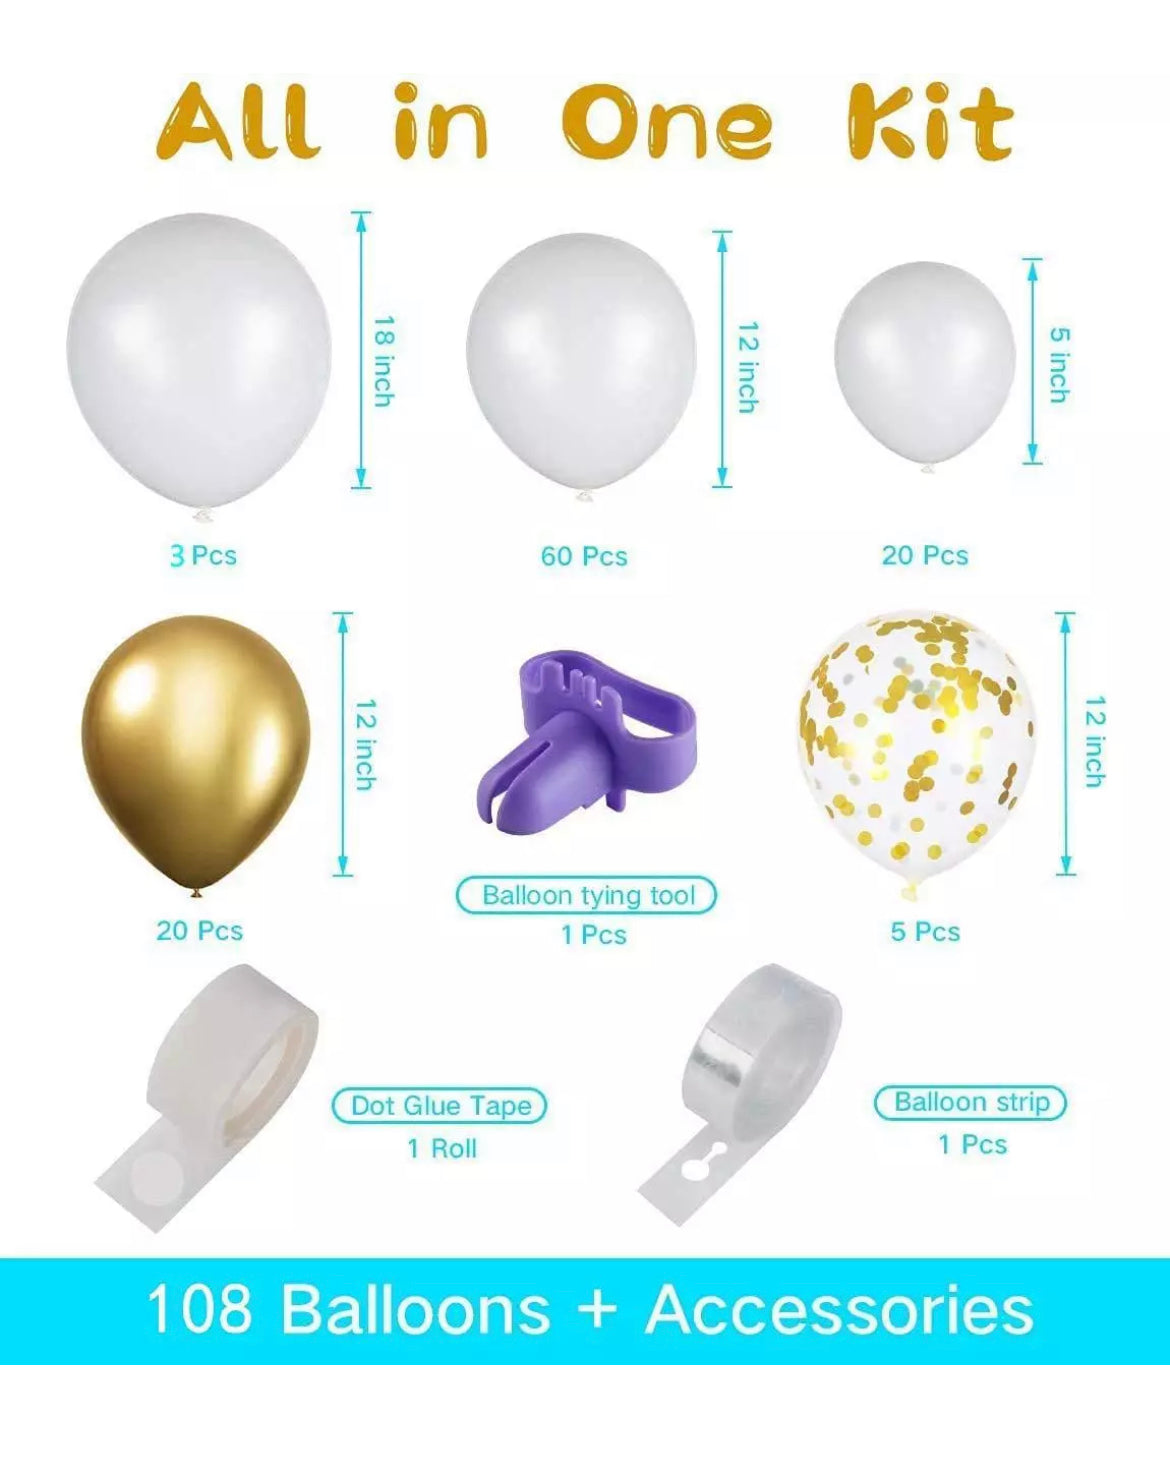 Pastel Yellow Balloons Garland Arch Kits - 60PCS 5/12/18 Inch